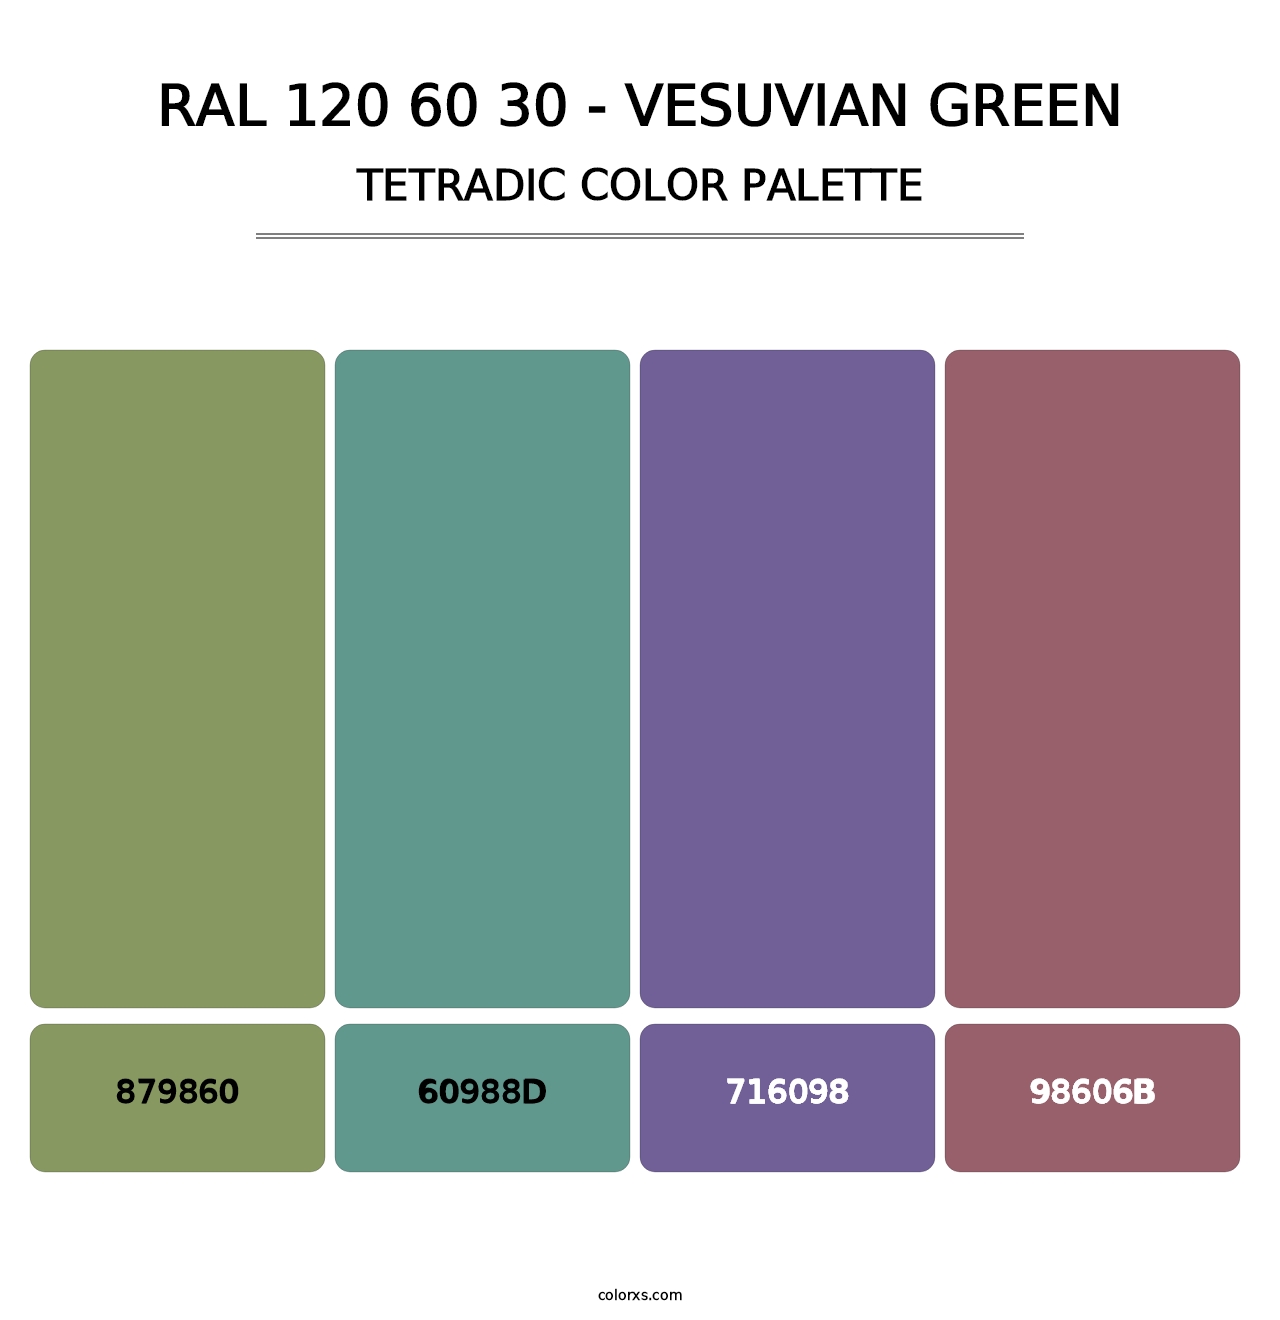 RAL 120 60 30 - Vesuvian Green - Tetradic Color Palette